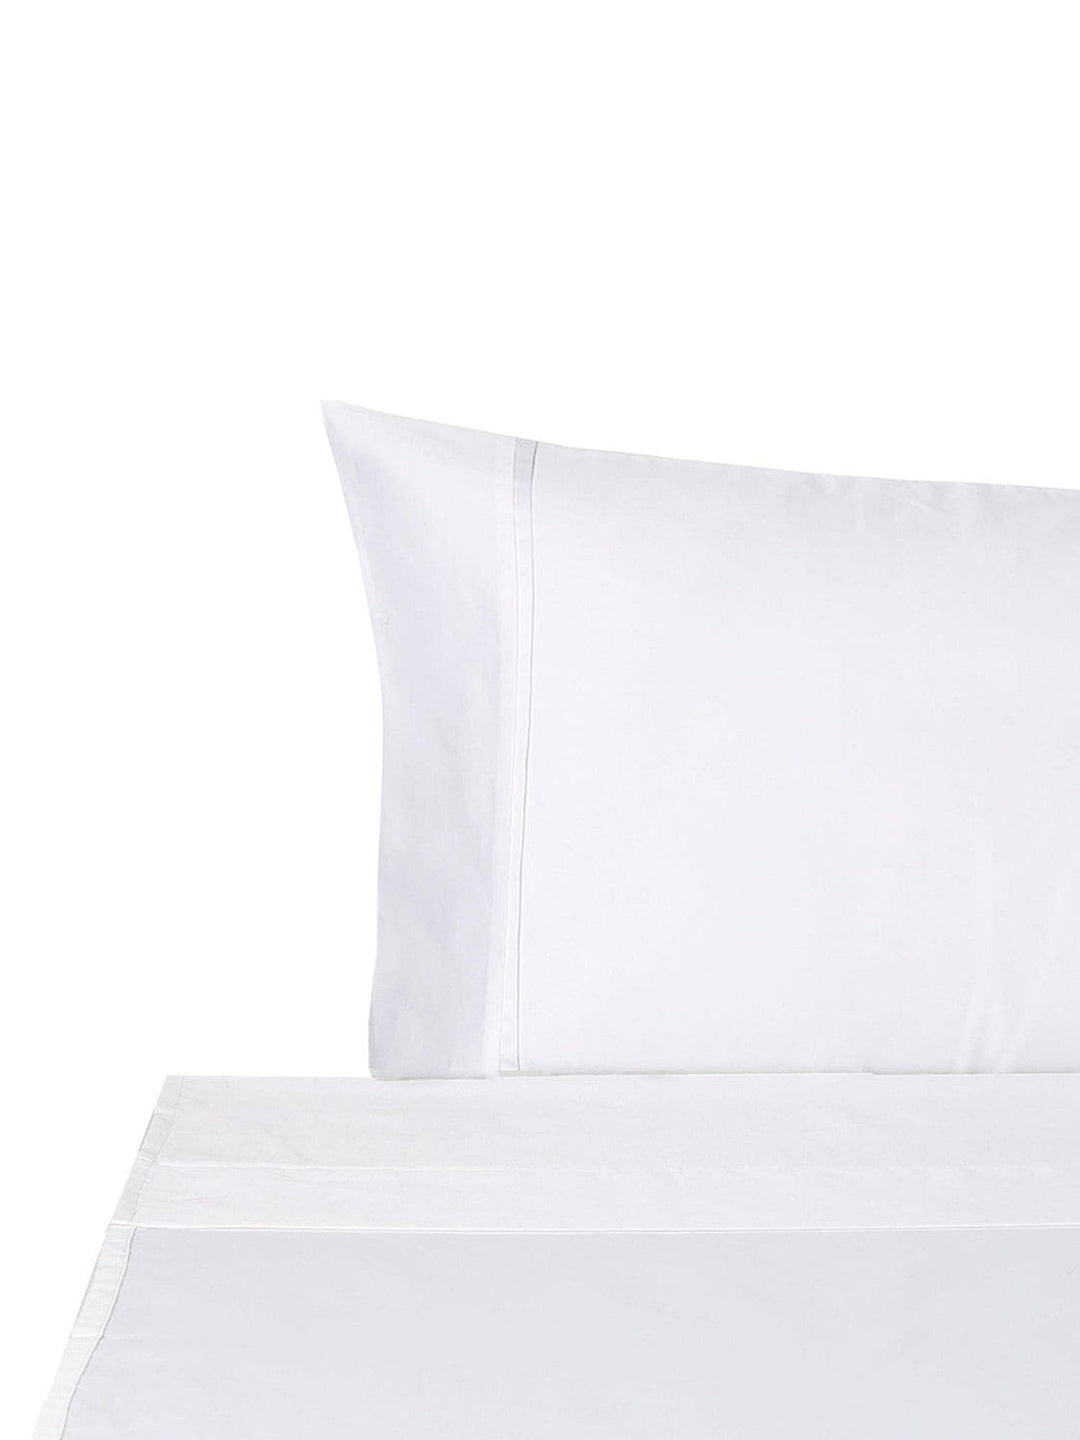 Graccioza Bovi & Graccioza Estate Pillowcase - White/White (Available in 2 Sizes)